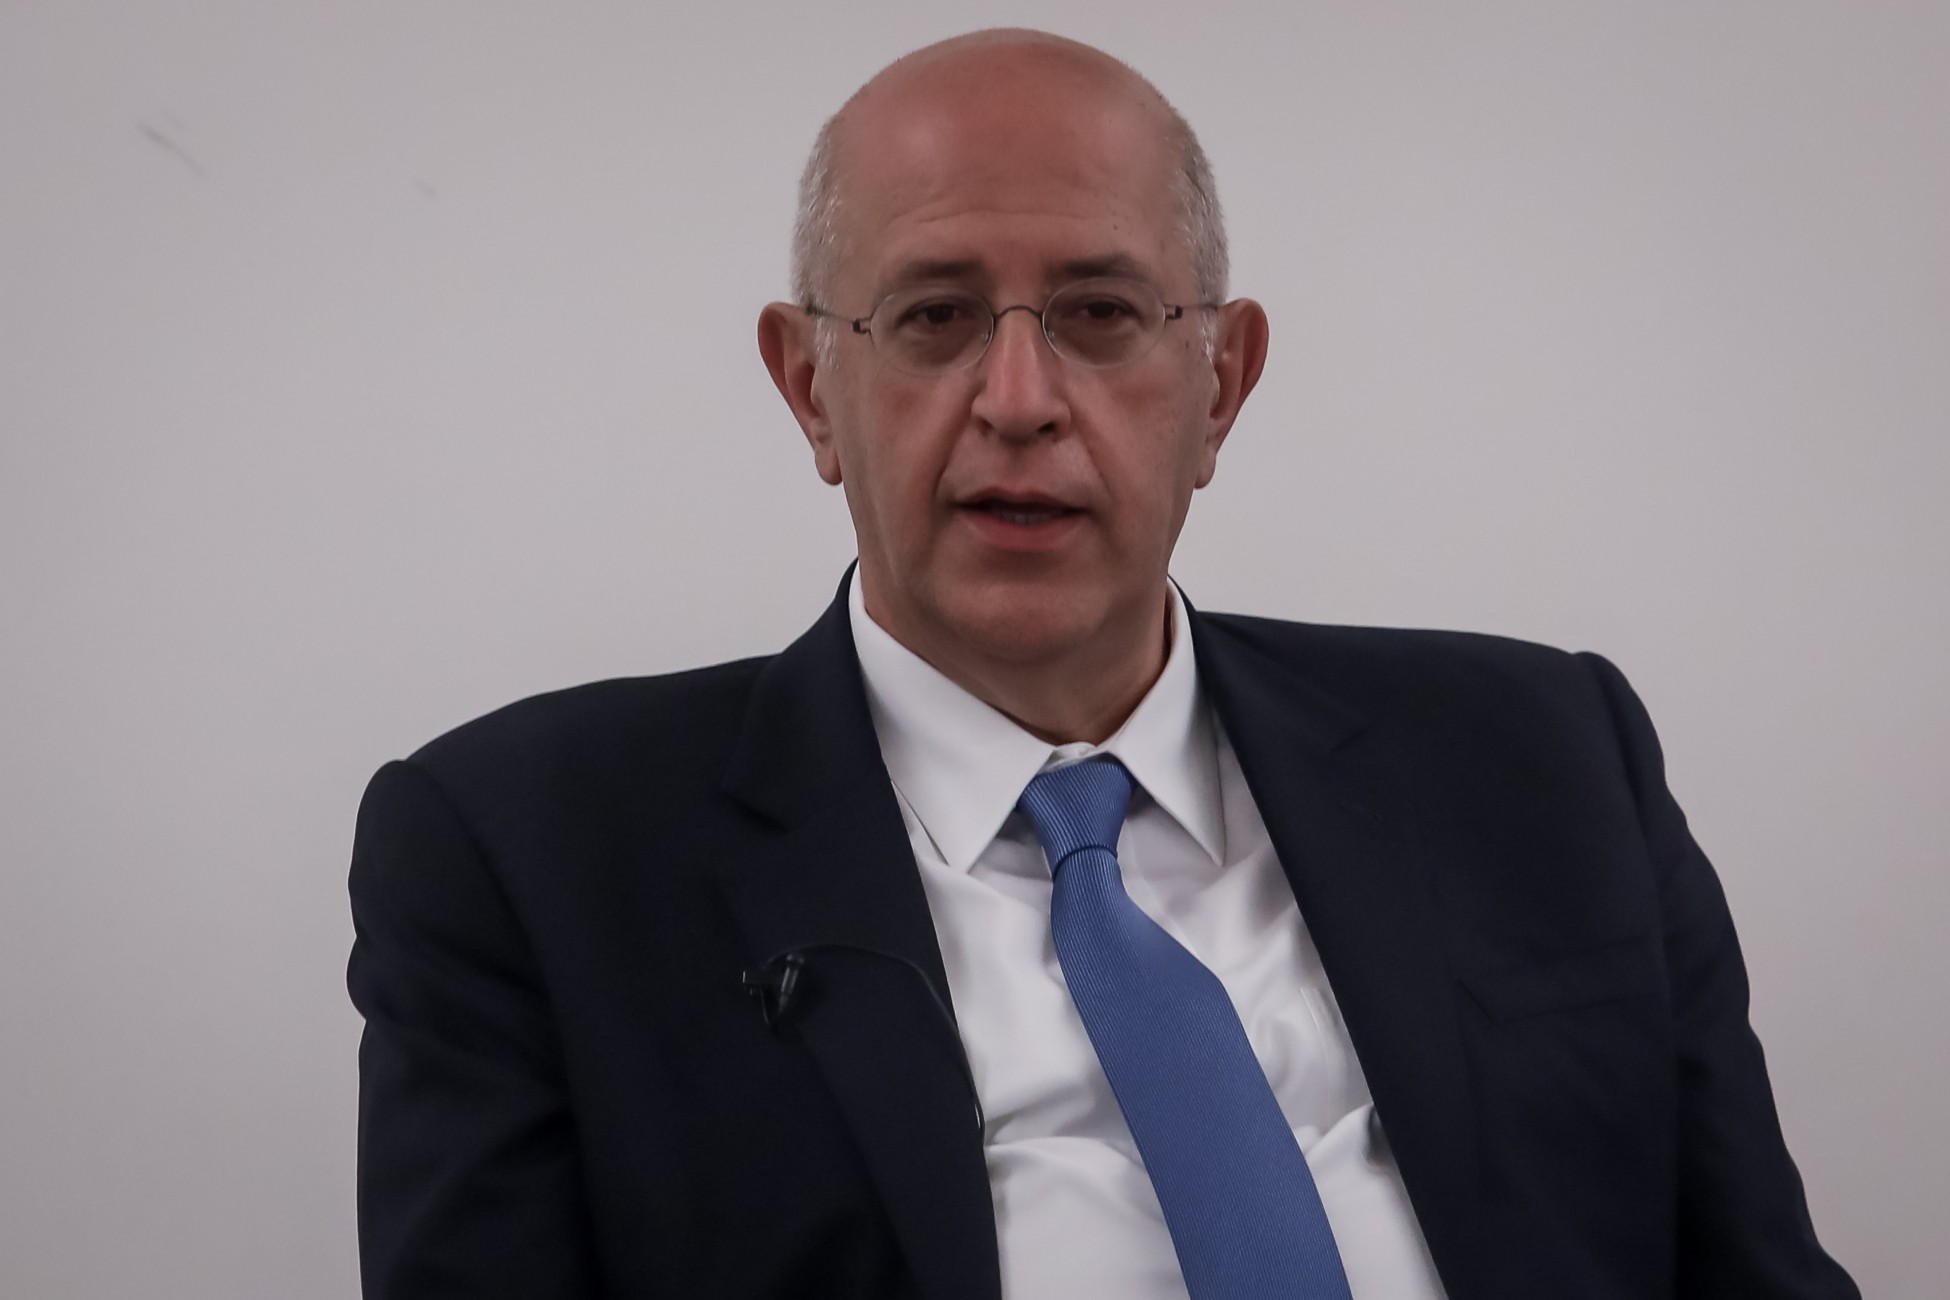 O Σπύρος Θεοδωρόπουλος ανακοίνωσε την υποψηφιότητά του για την Προεδρία του ΣΕΒ